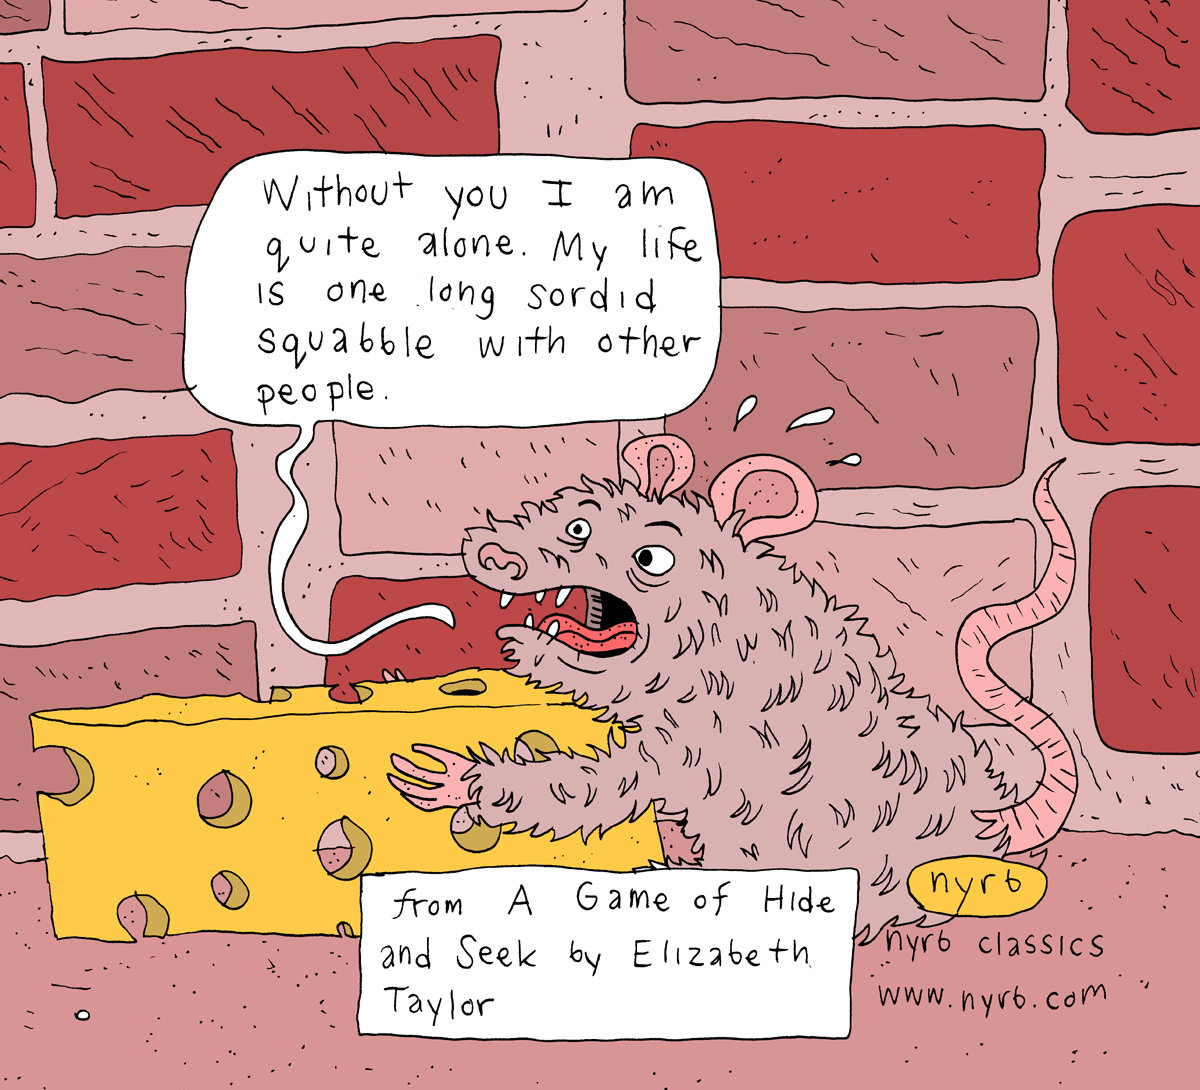 Nyrb Rat